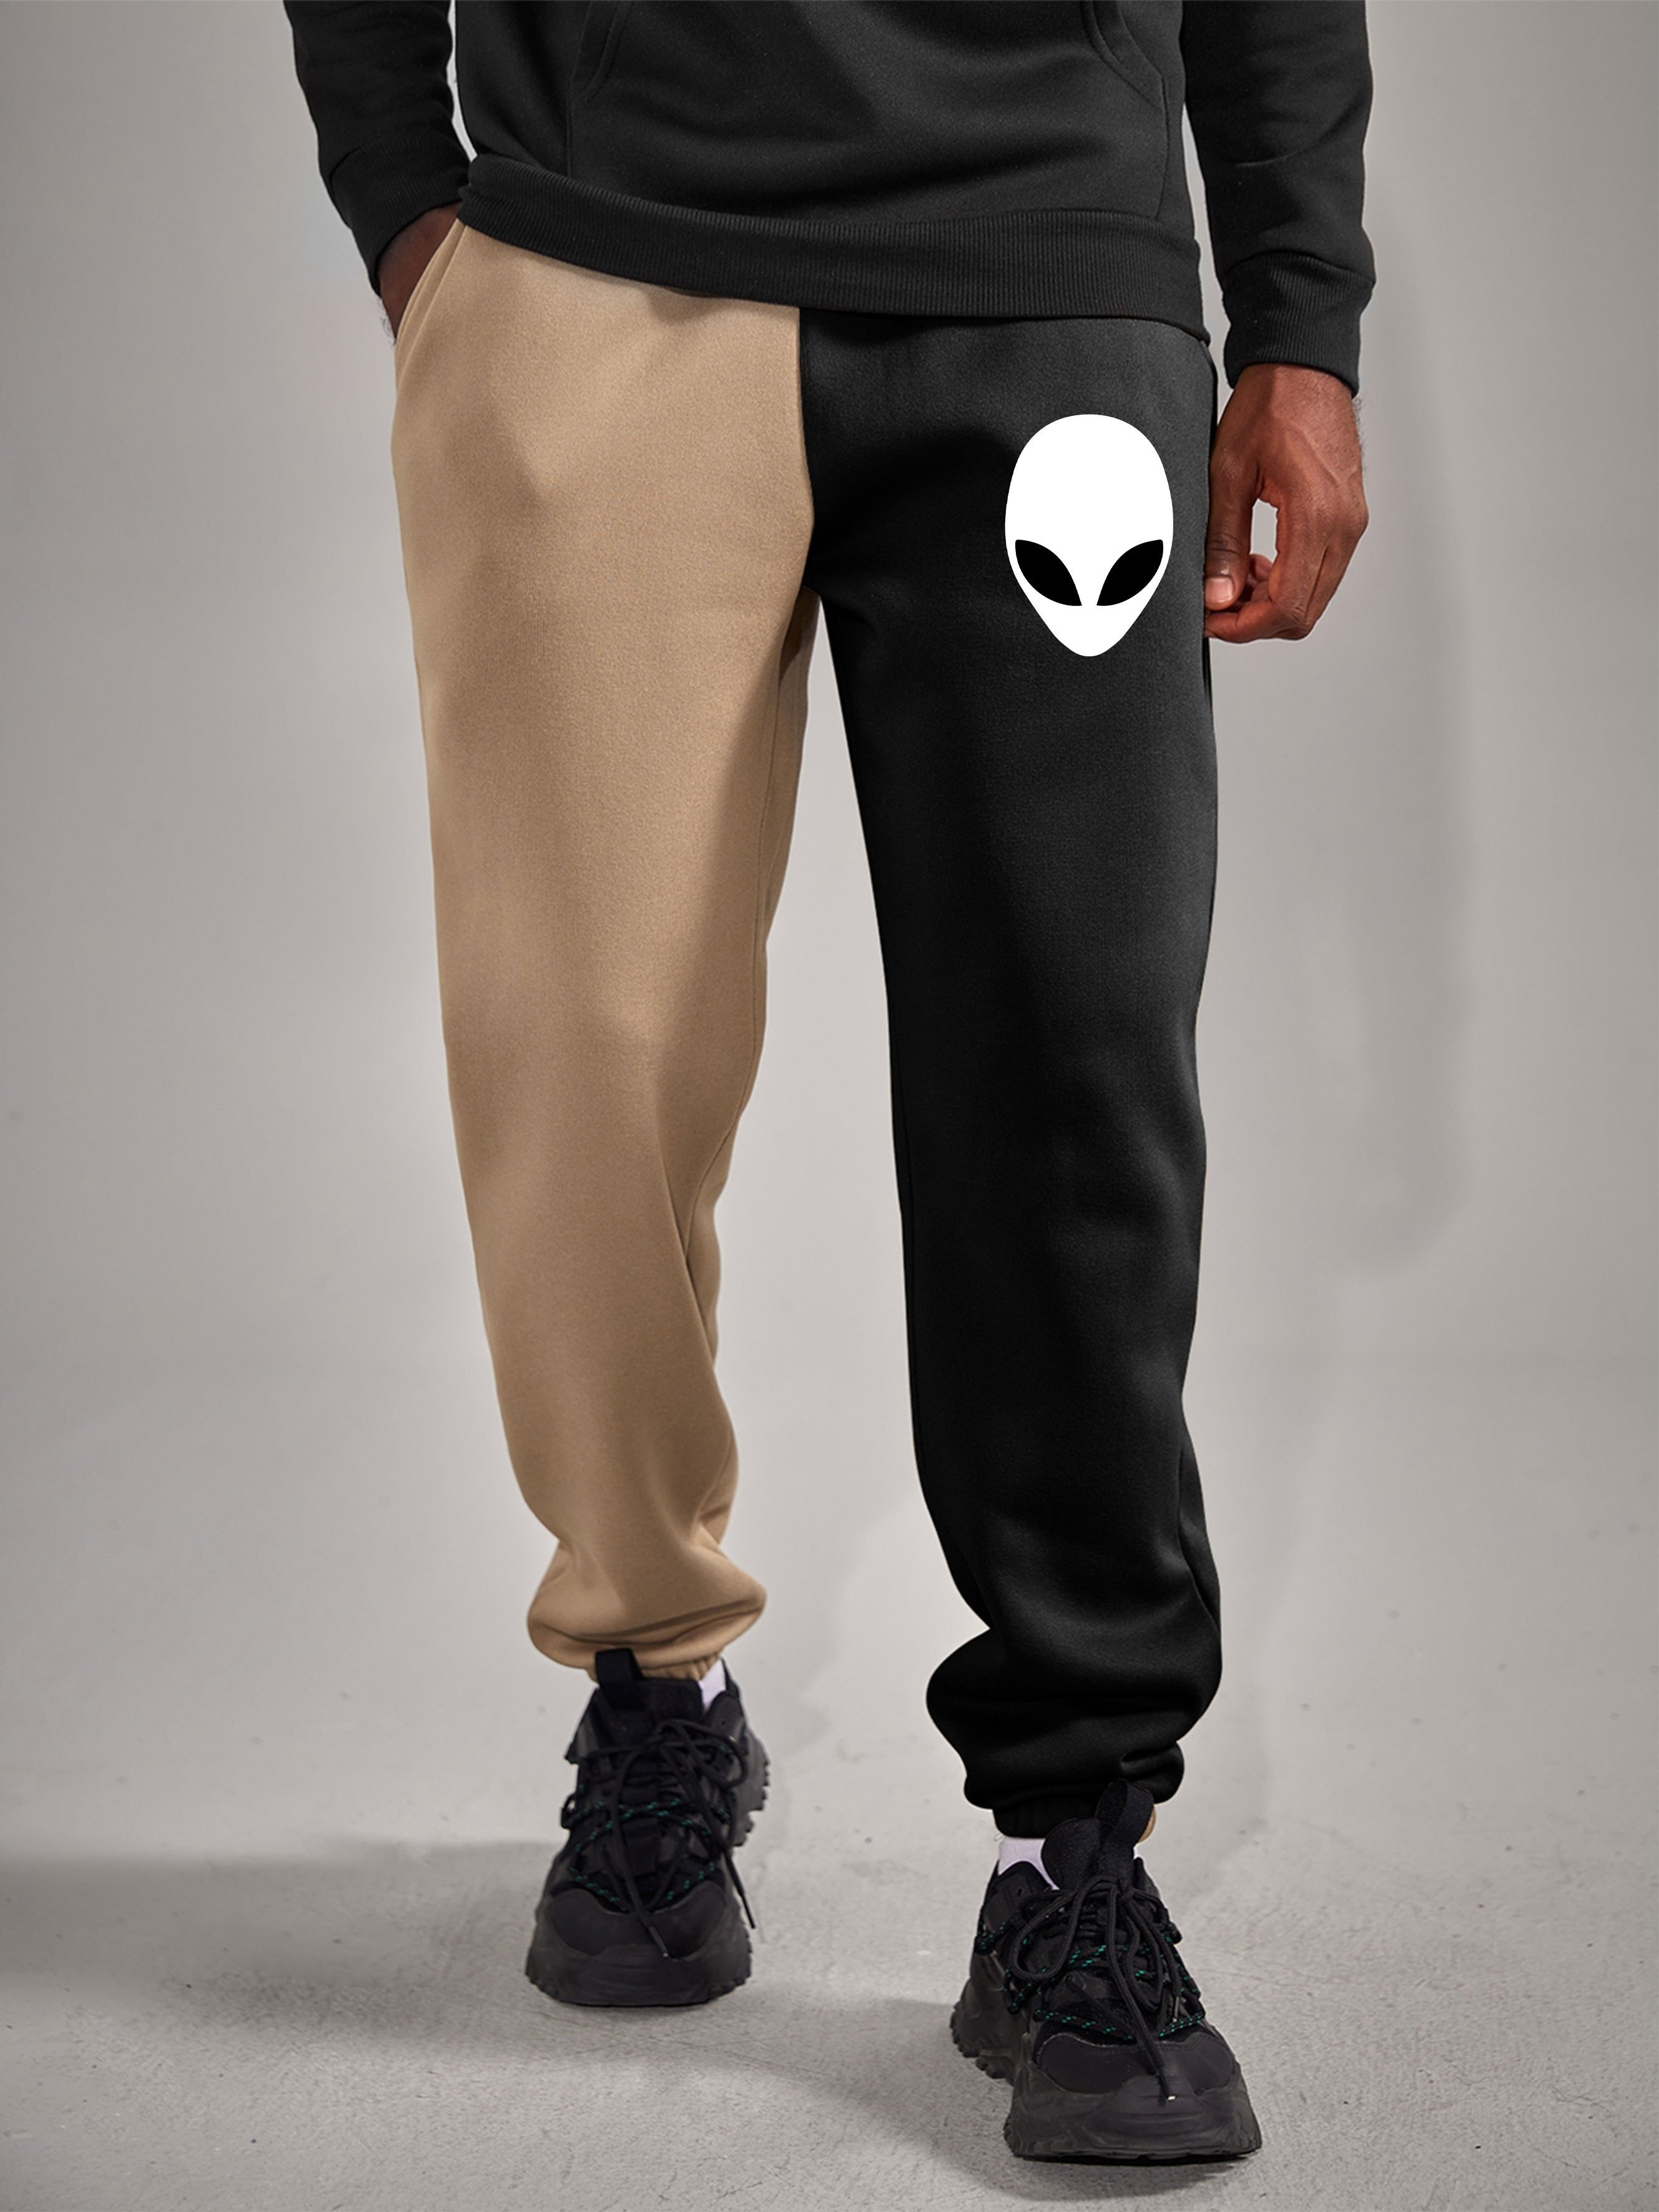 Pantalones de chándal para hombre con cordón holgado, con varios bolsillos